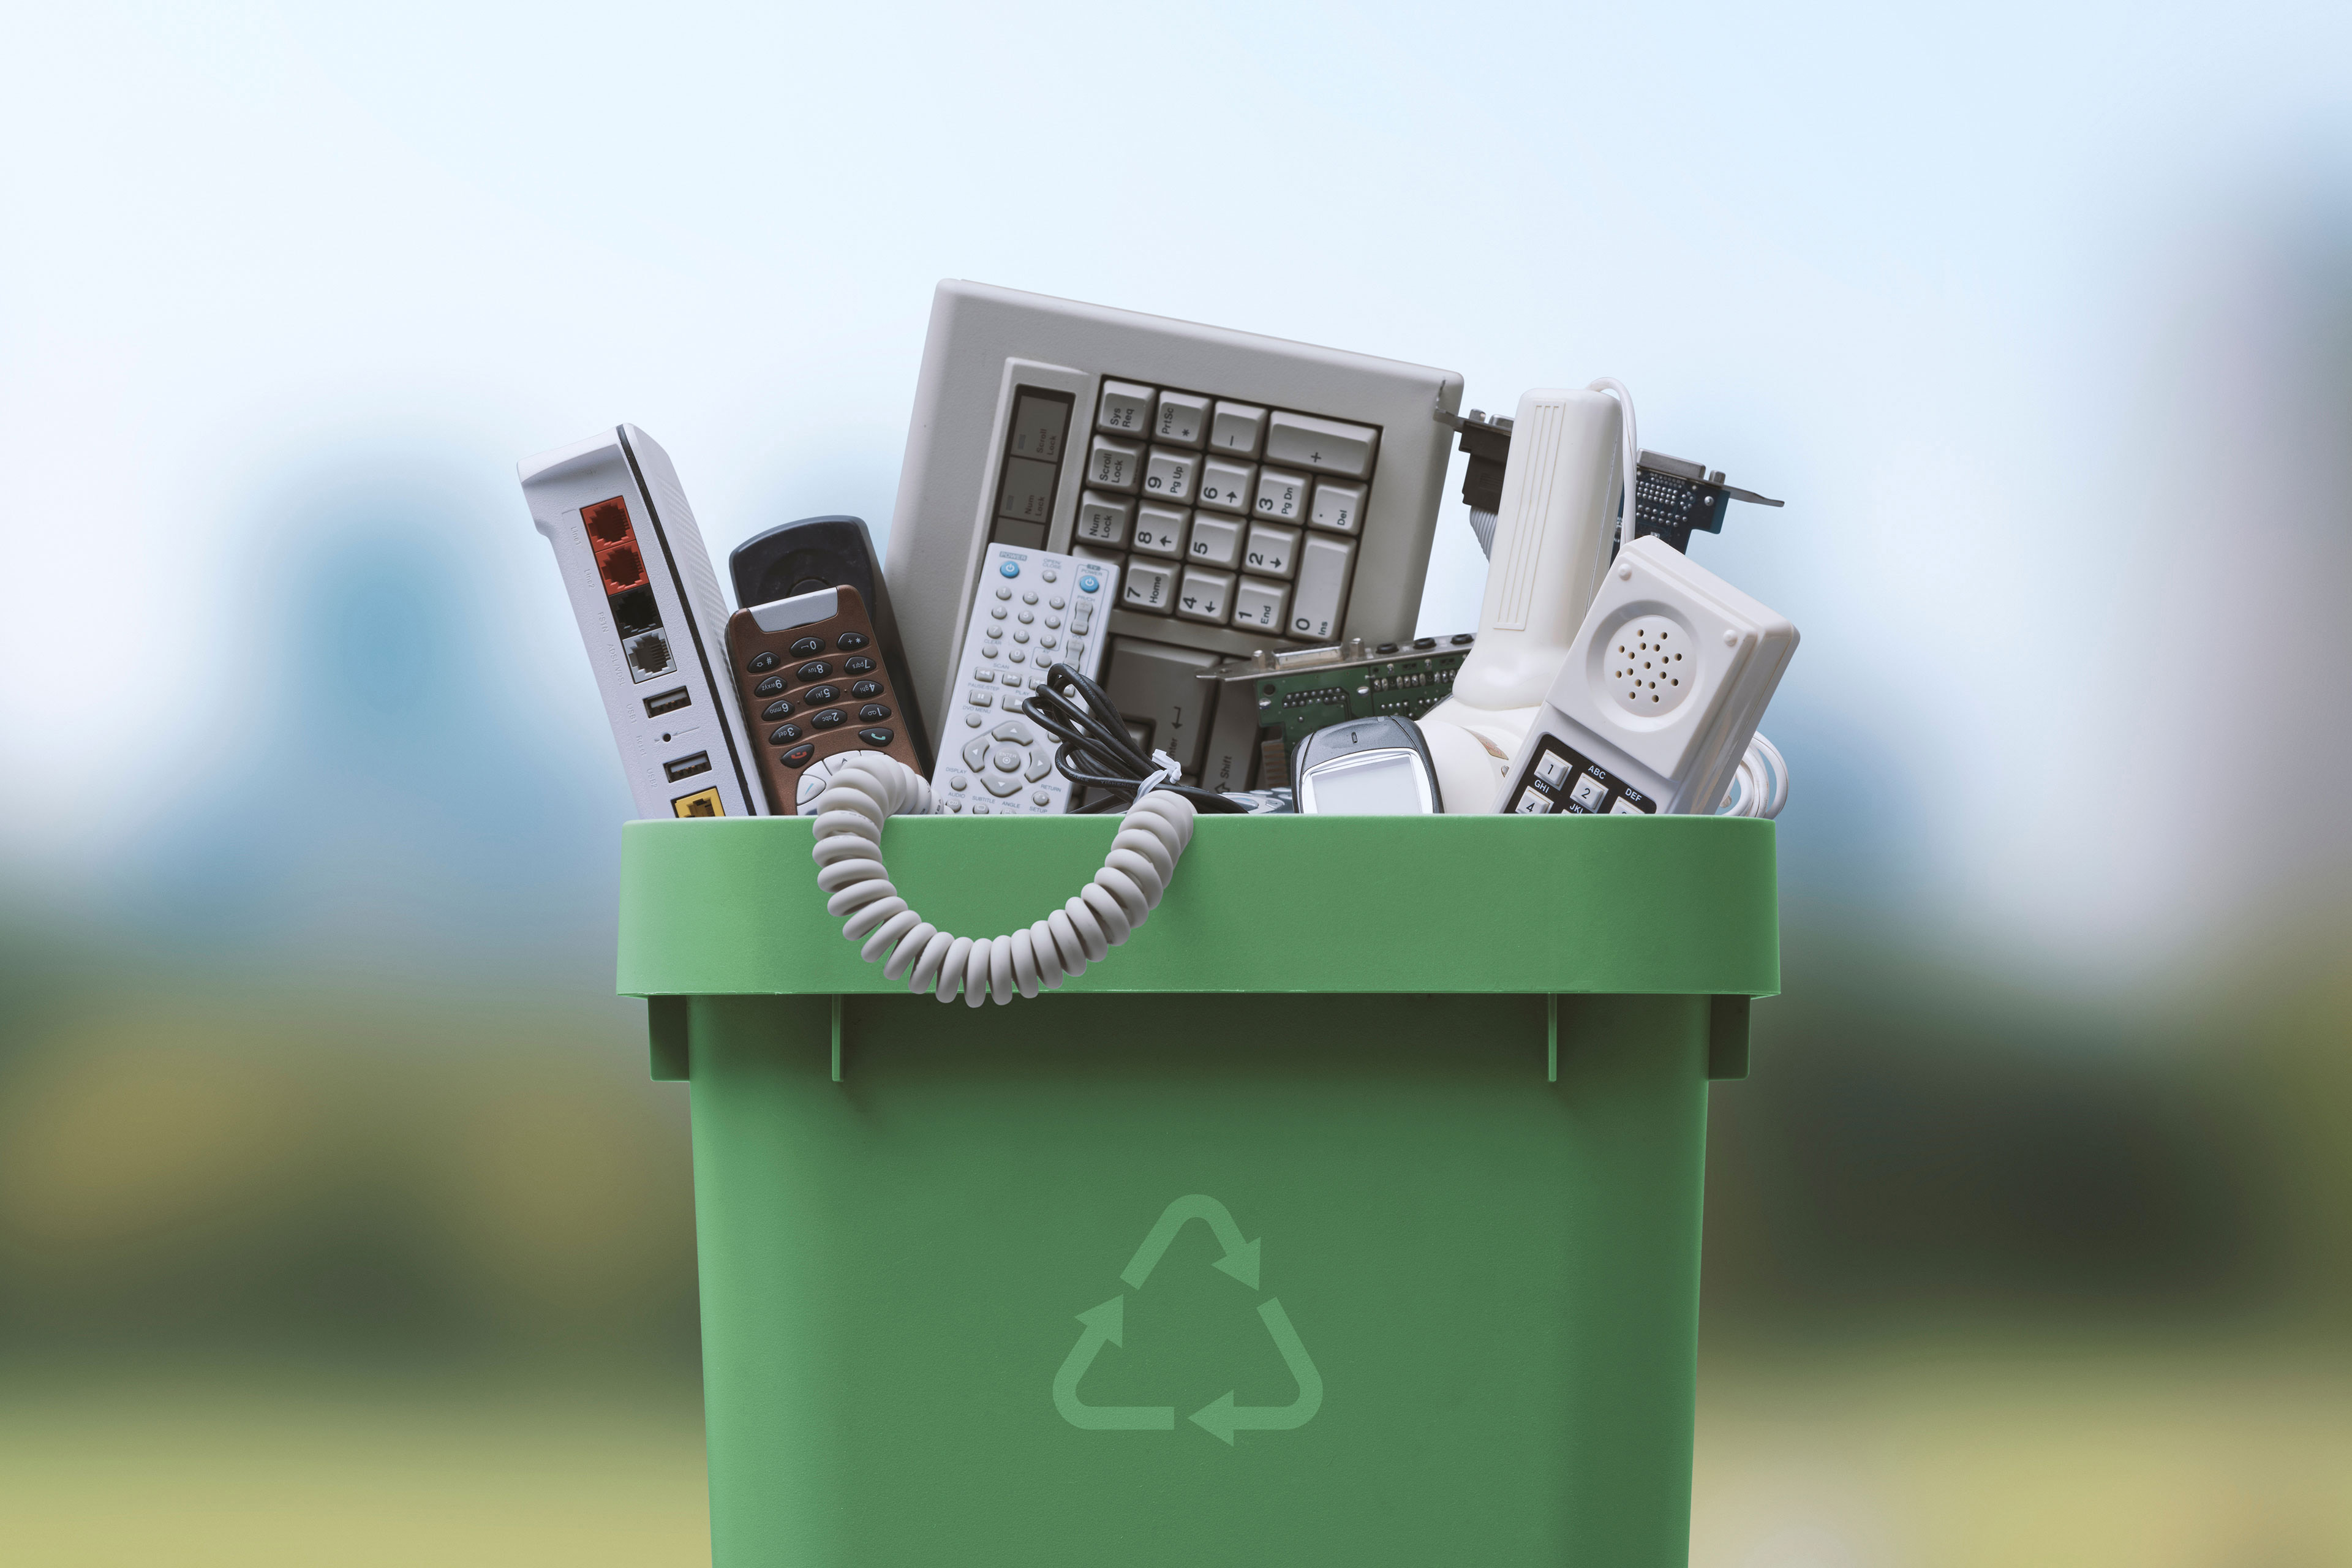 Reducing electronic waste